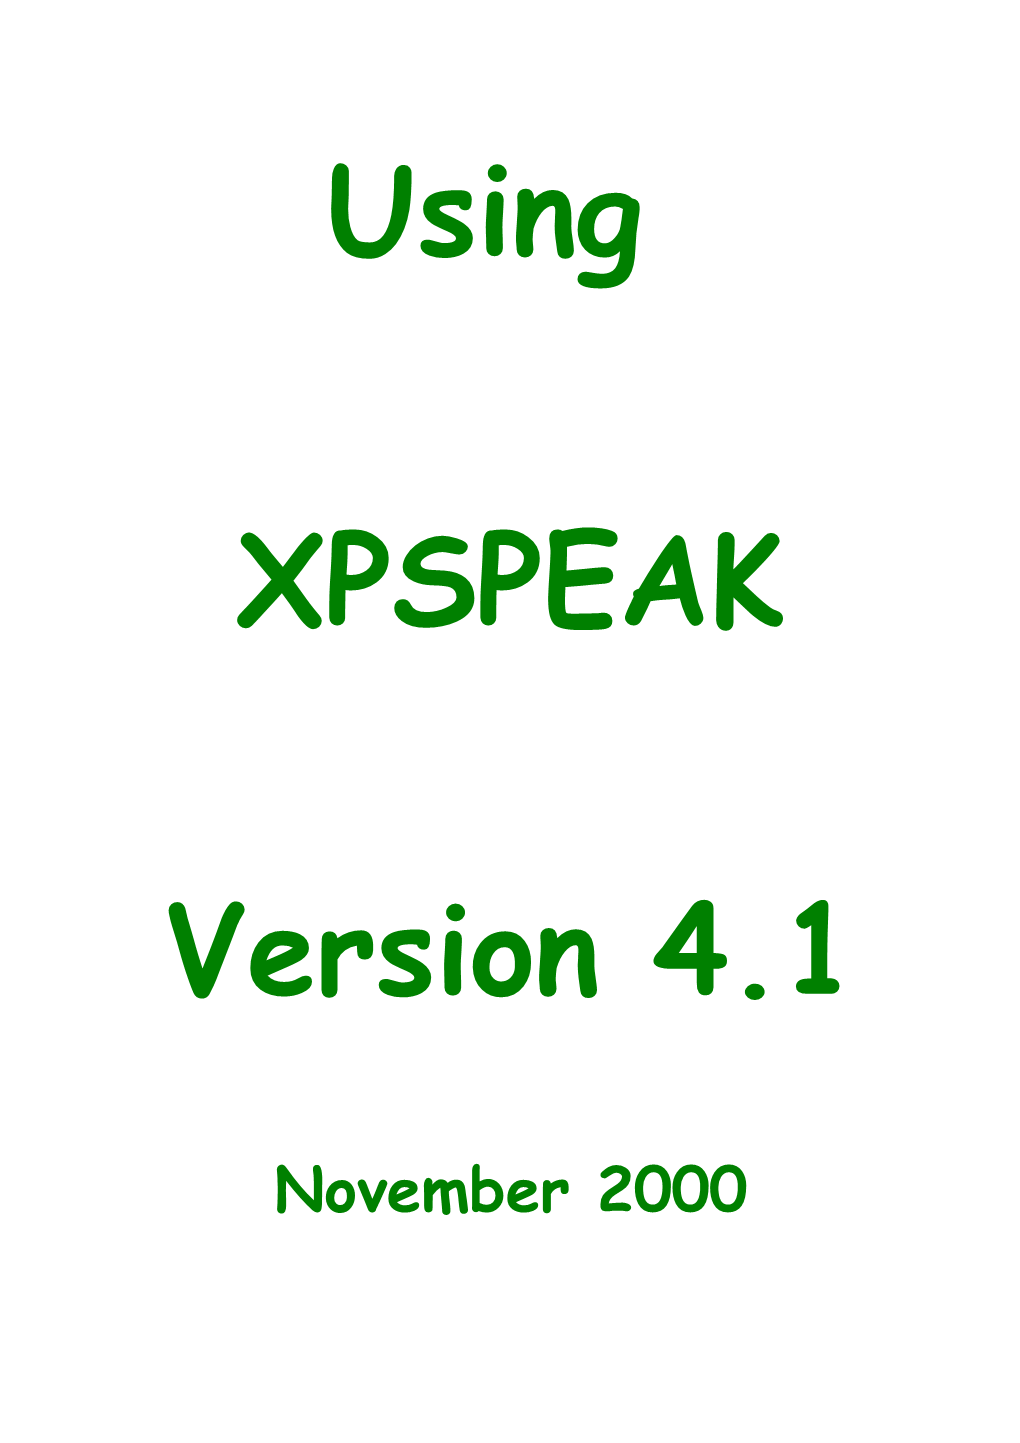 XPS Peak Fitting Program for WIN95/98 XPSPEAK Version 4.1